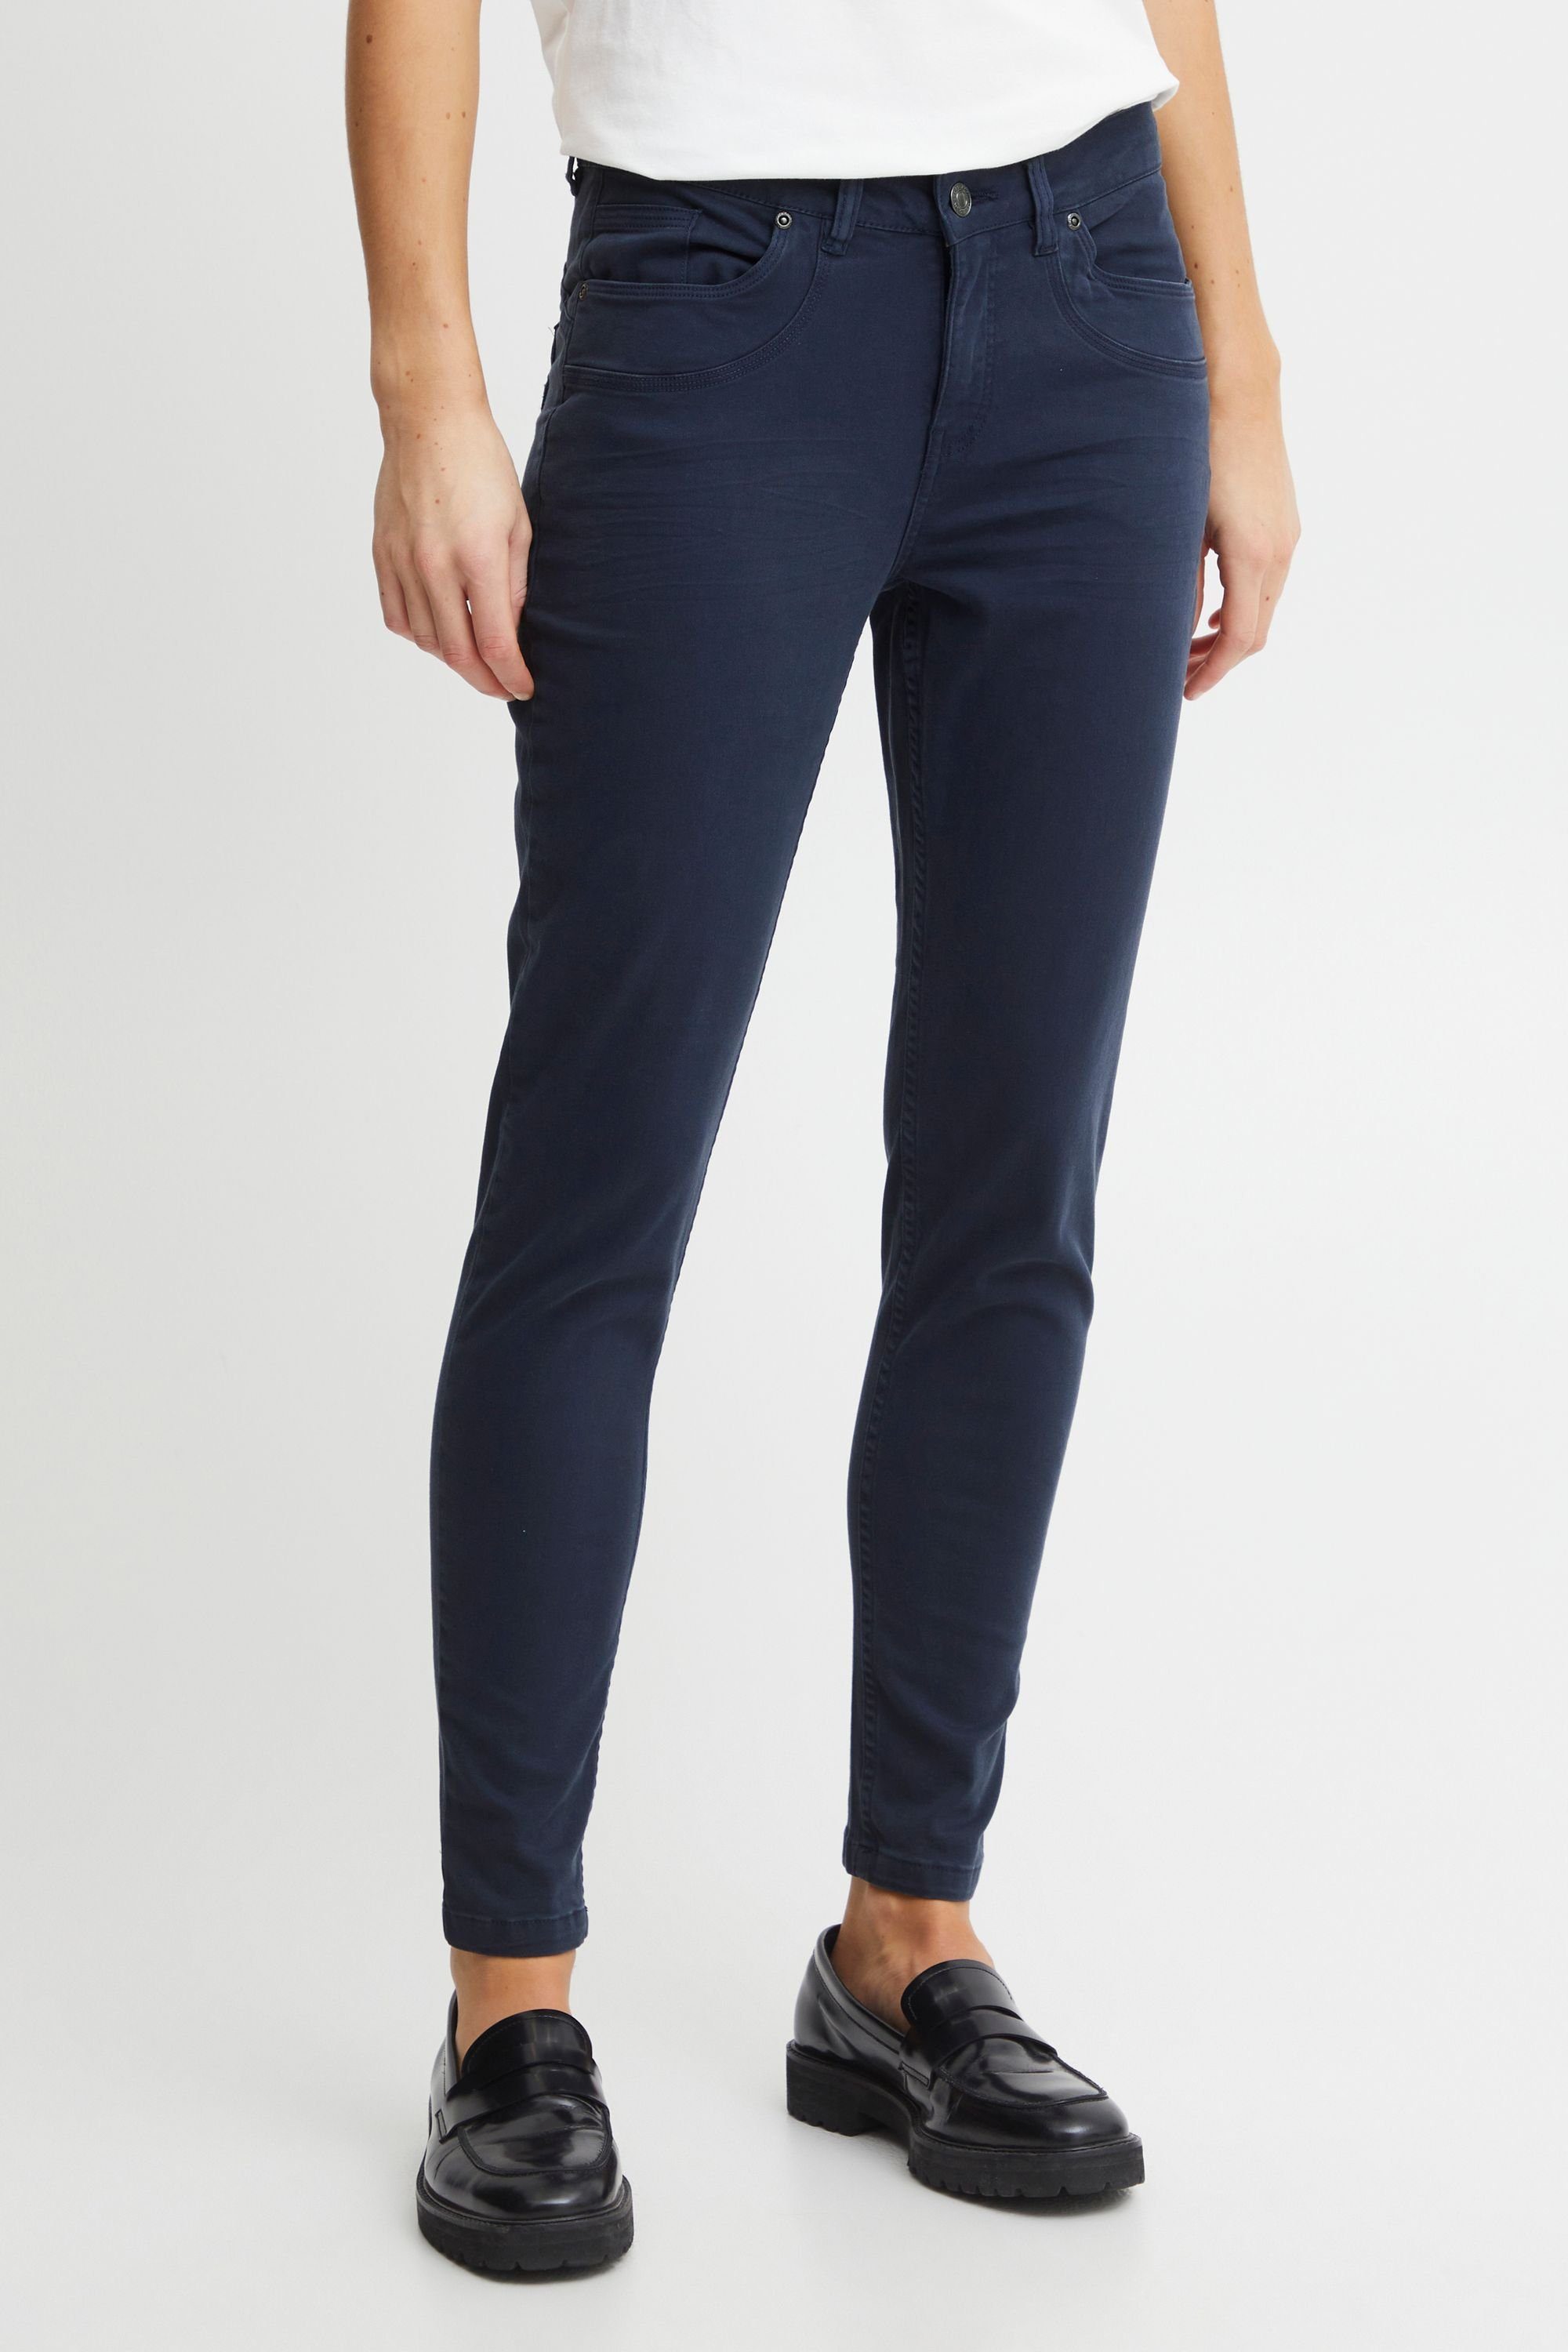 2 Pants Fransa FRFOTWILL - 5-Pocket-Jeans fransa 20610422